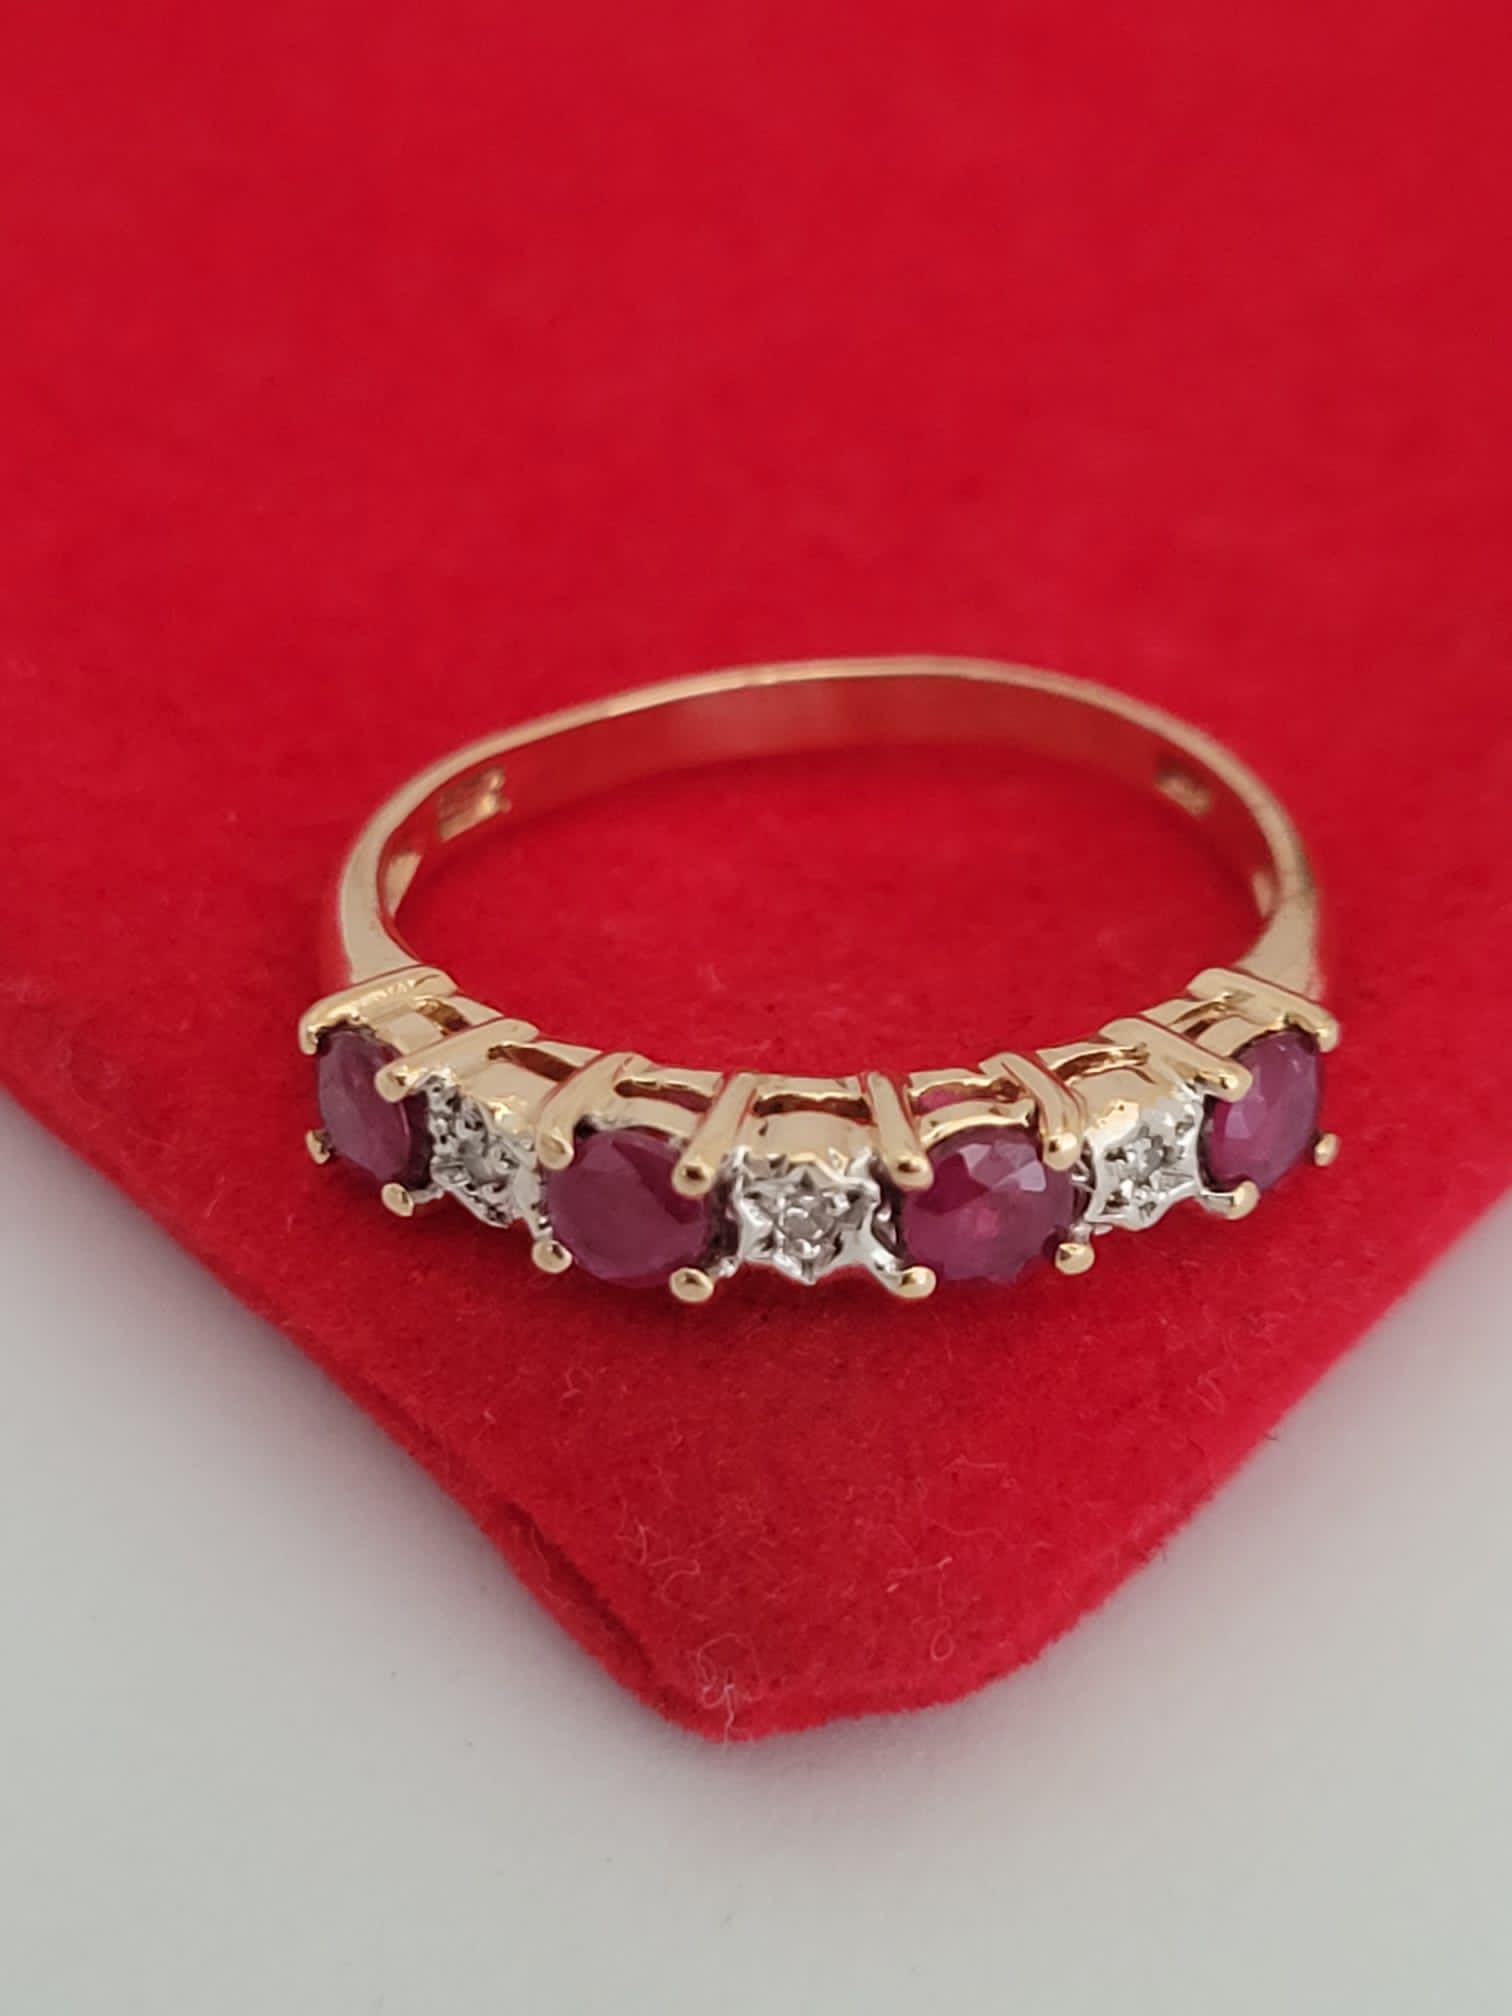 ❤️10k Size 6.5 Beautiful yellow gold Ruby & Genuine Diamonds Band Ring!/Anillo de oro de banda con rubíes y diamantes genuinos👌🤩🌸post tags: 10k 14k